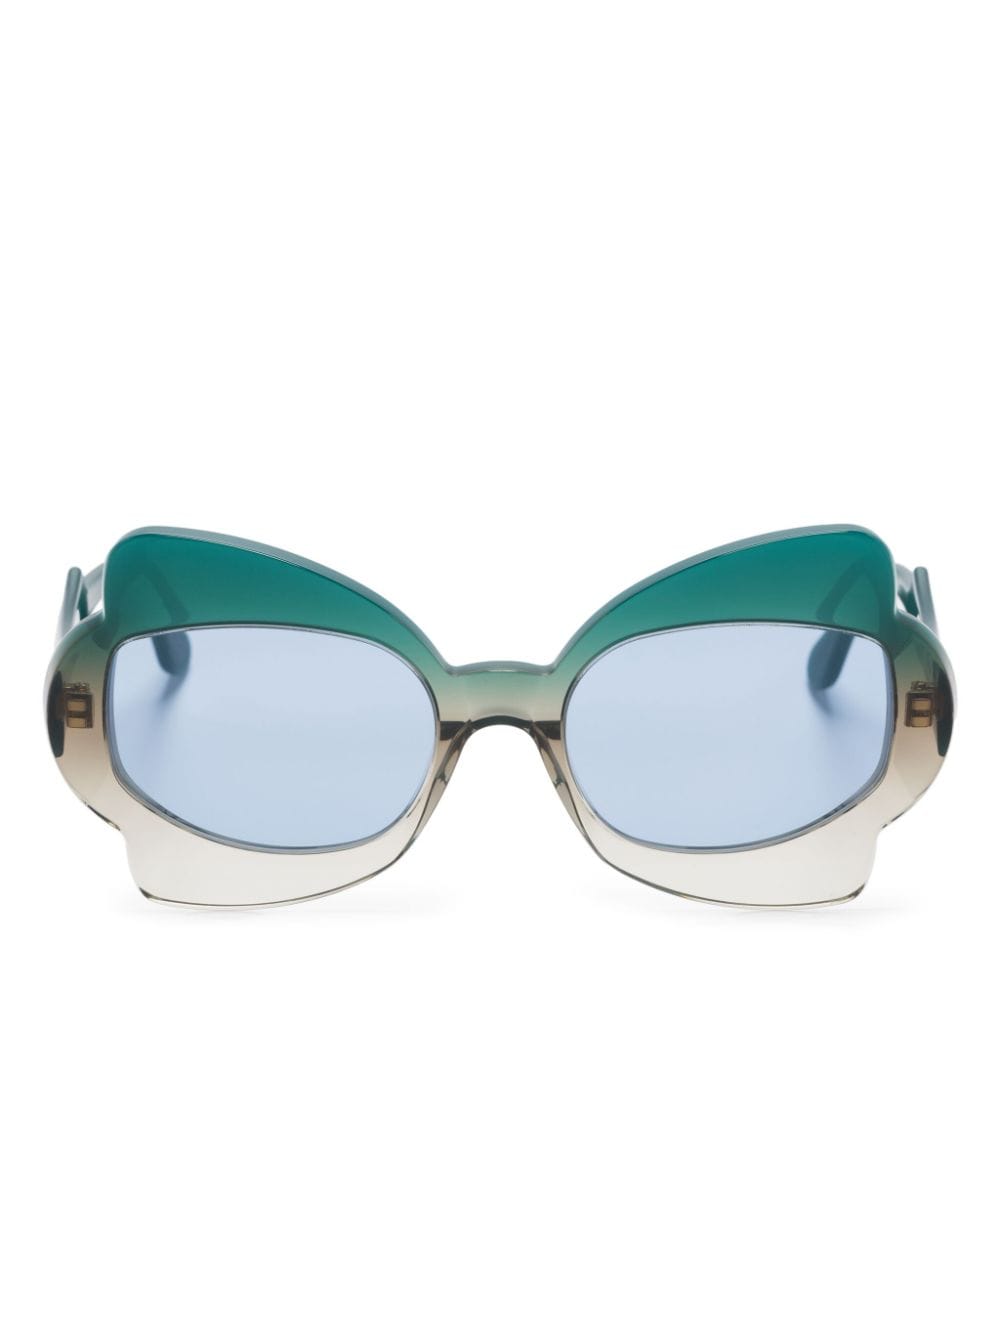 Marni Eyewear Monumental Gate Sonnenbrille im Oversized-Look - Grün von Marni Eyewear